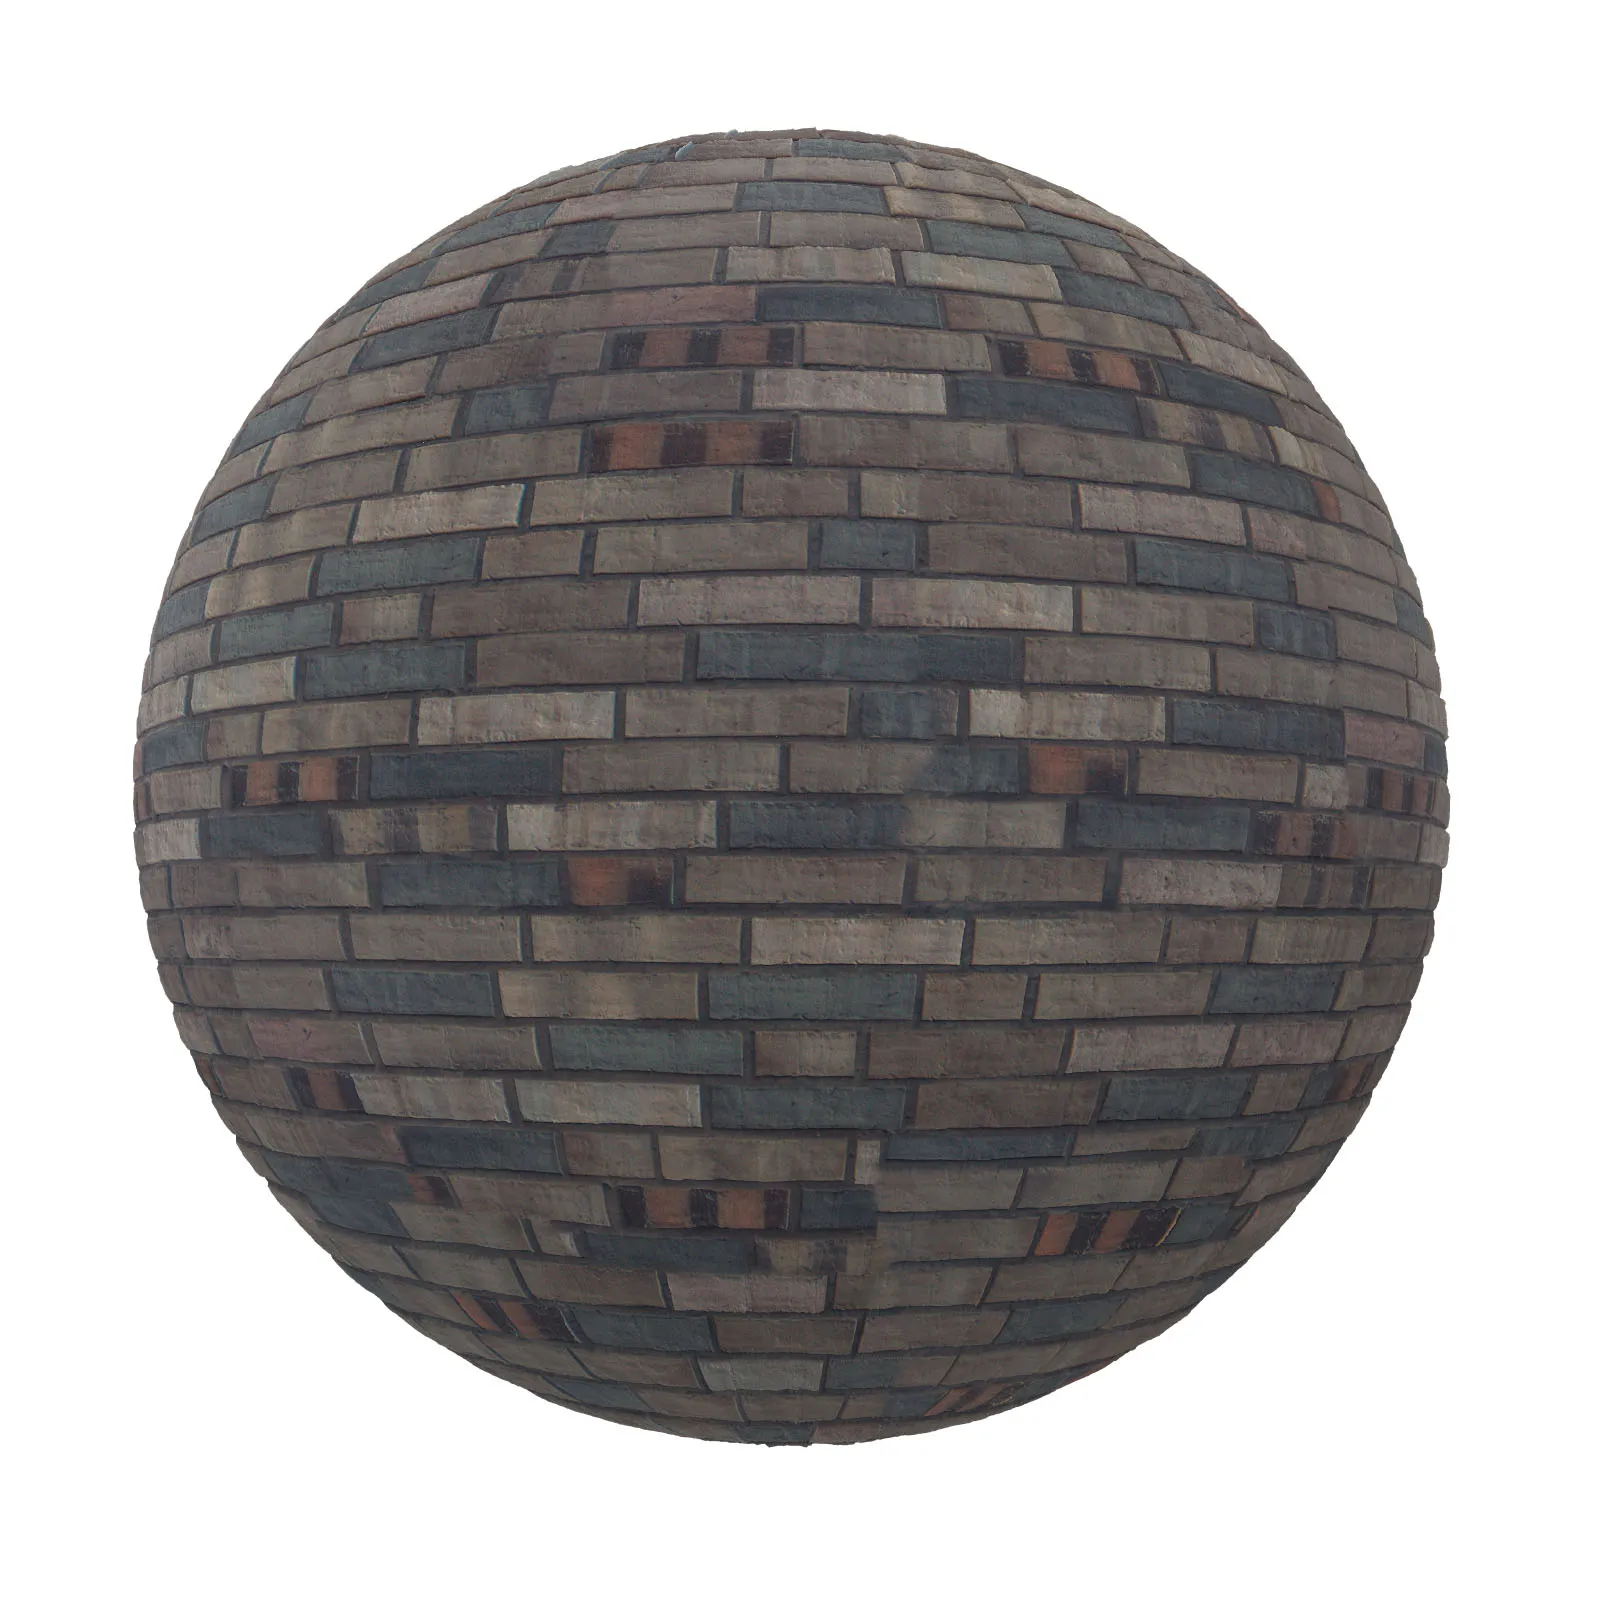 PBR CGAXIS TEXTURES – PAVEMENTS – Stone Brick Pavement 3